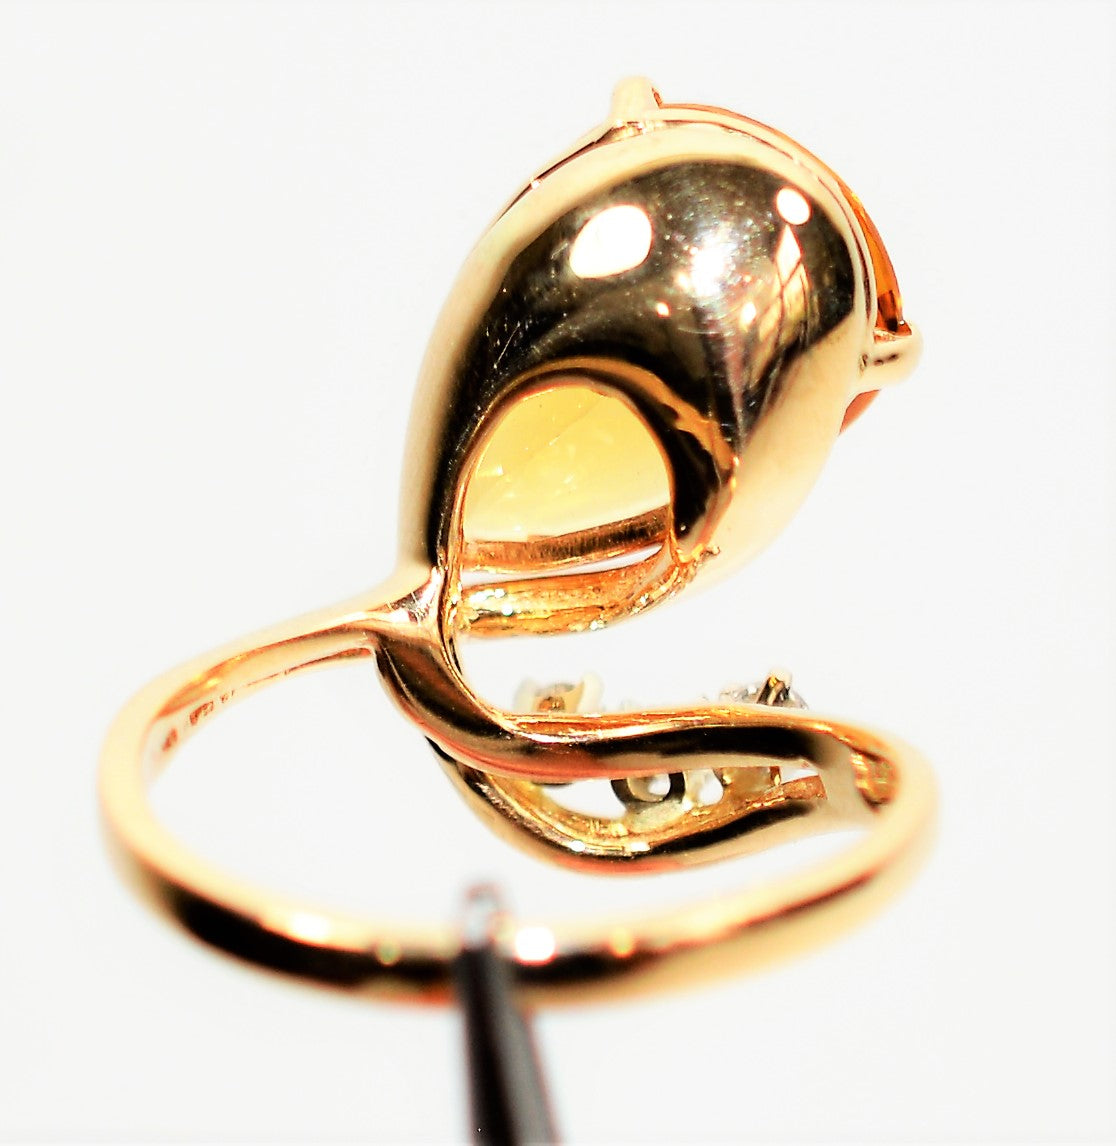 Natural Golden Beryl & Diamond Ring 14K Solid Gold 3.45tcw Statement Ring Cocktail Ring Ladies Ring Yellow Ring Birthstone Ring Women's Ring